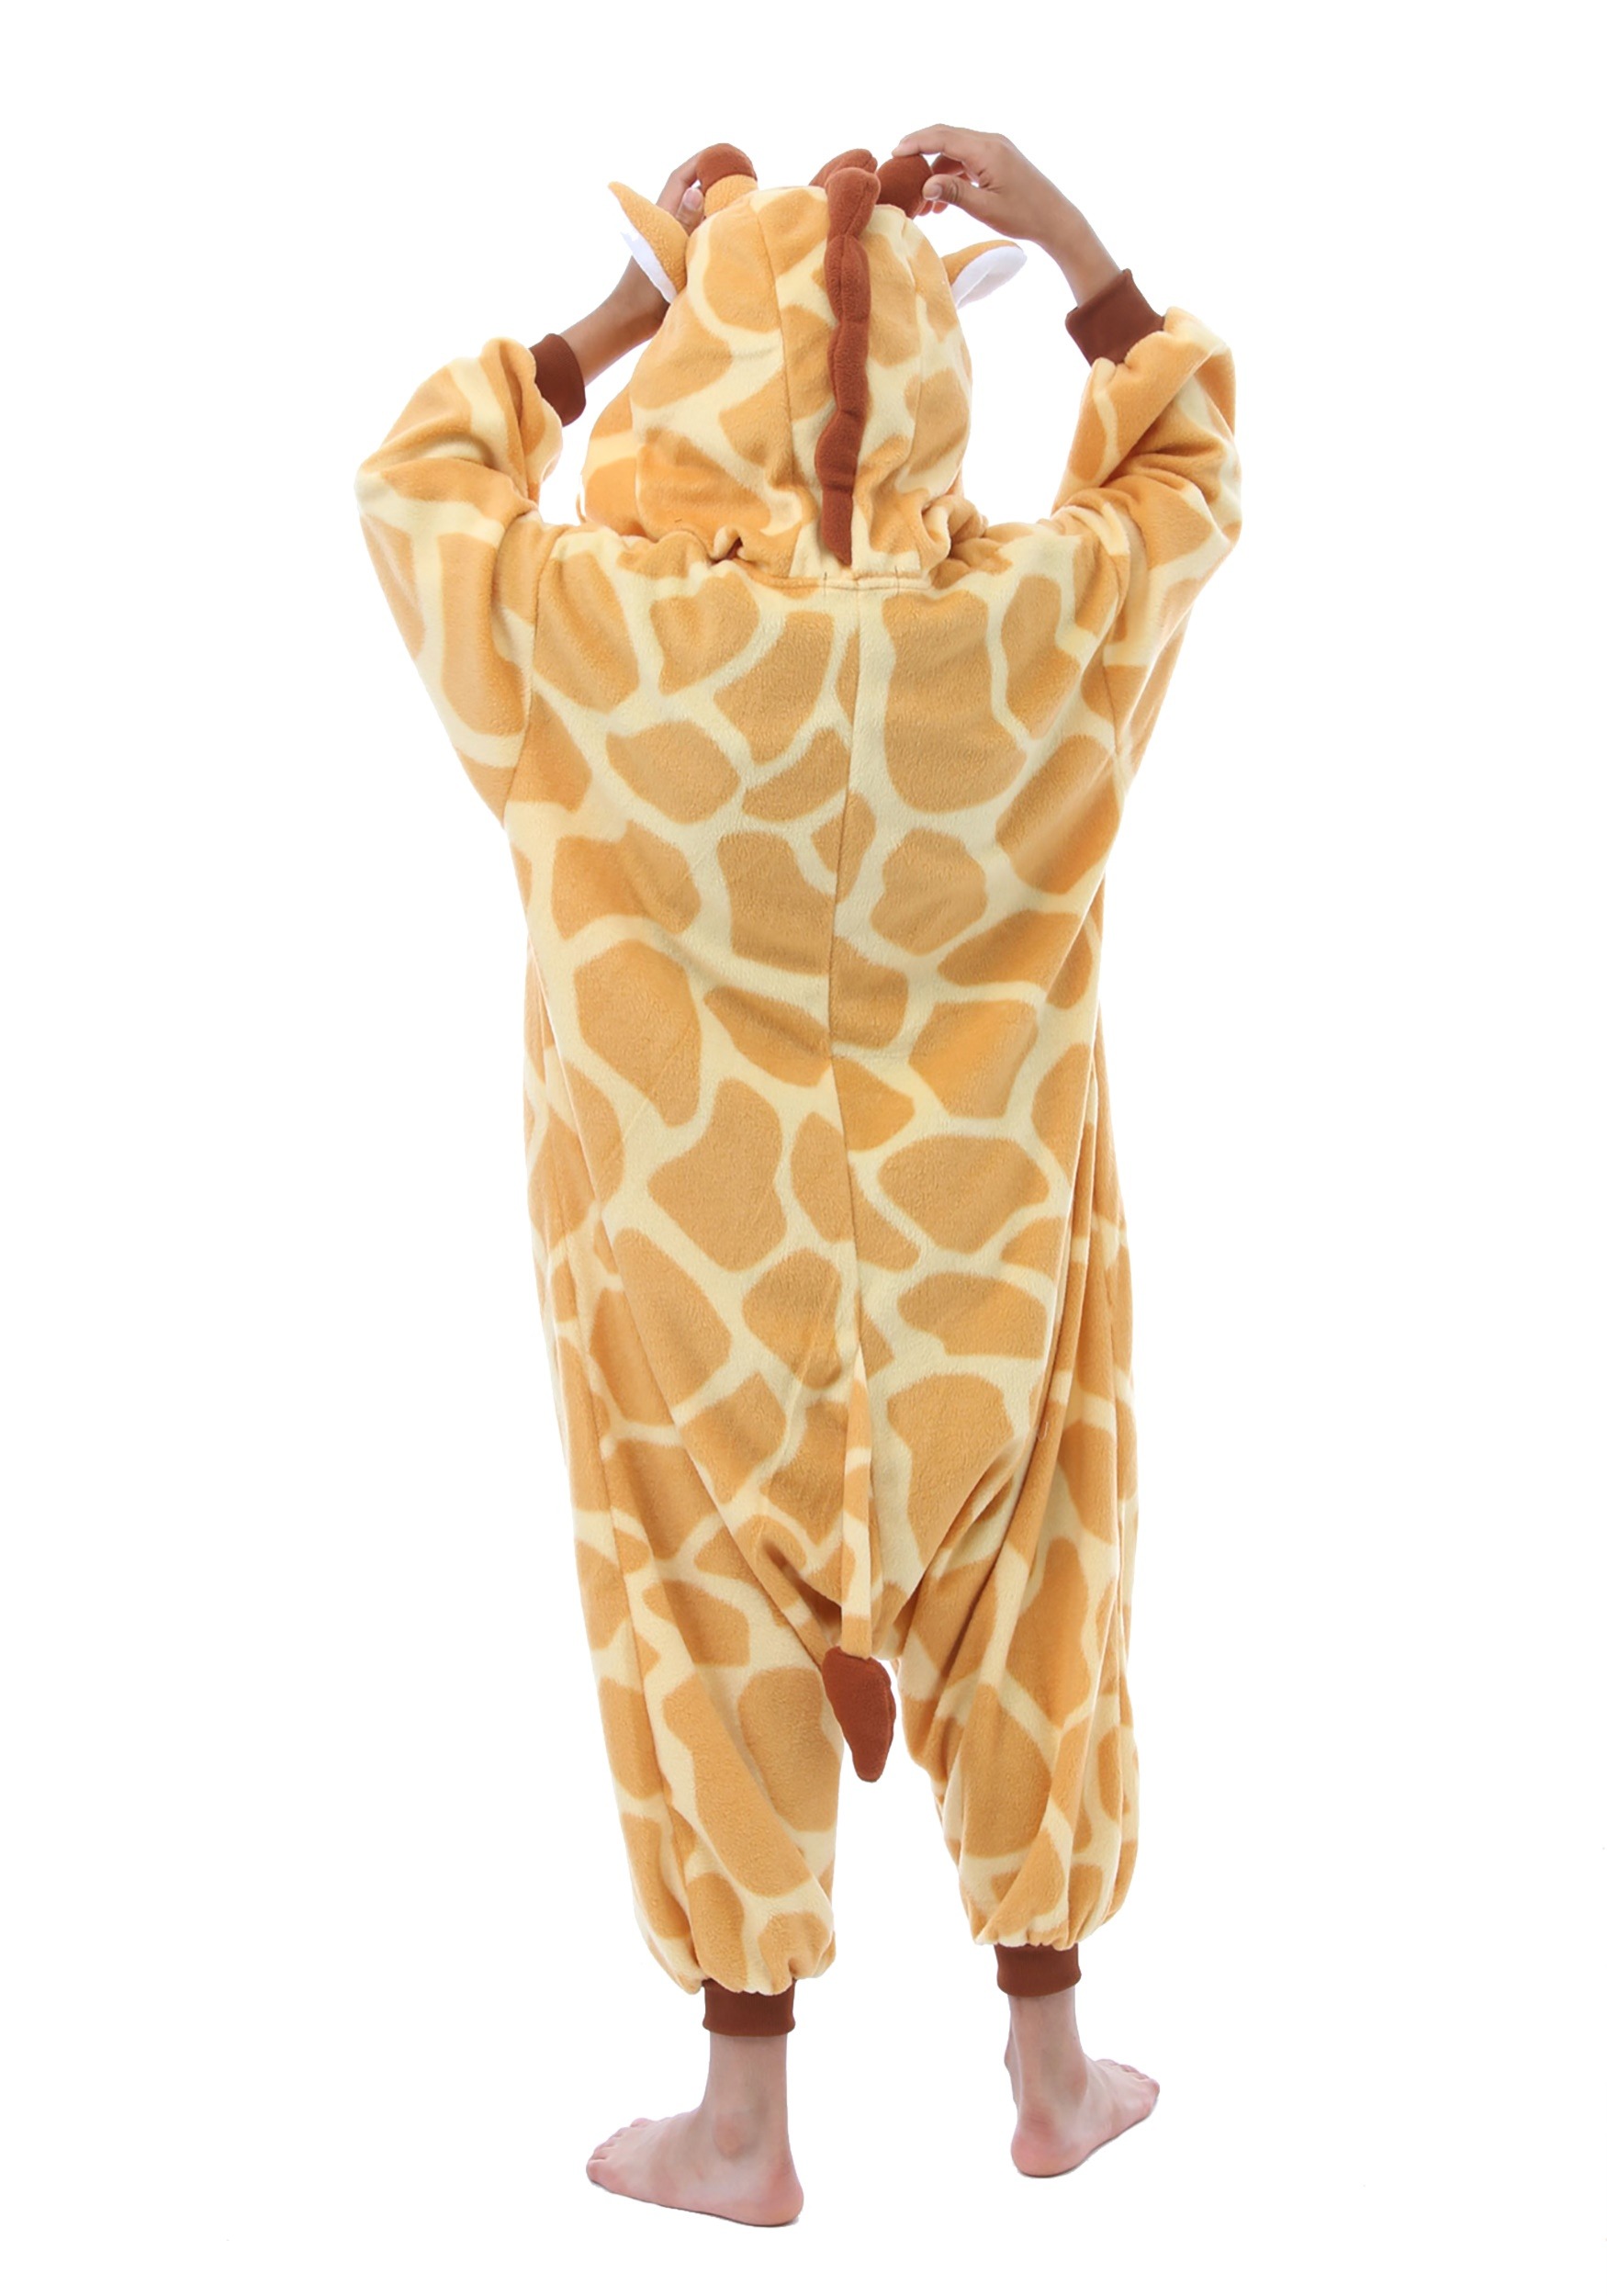 Giraffe Kigurumi Kid's Costume